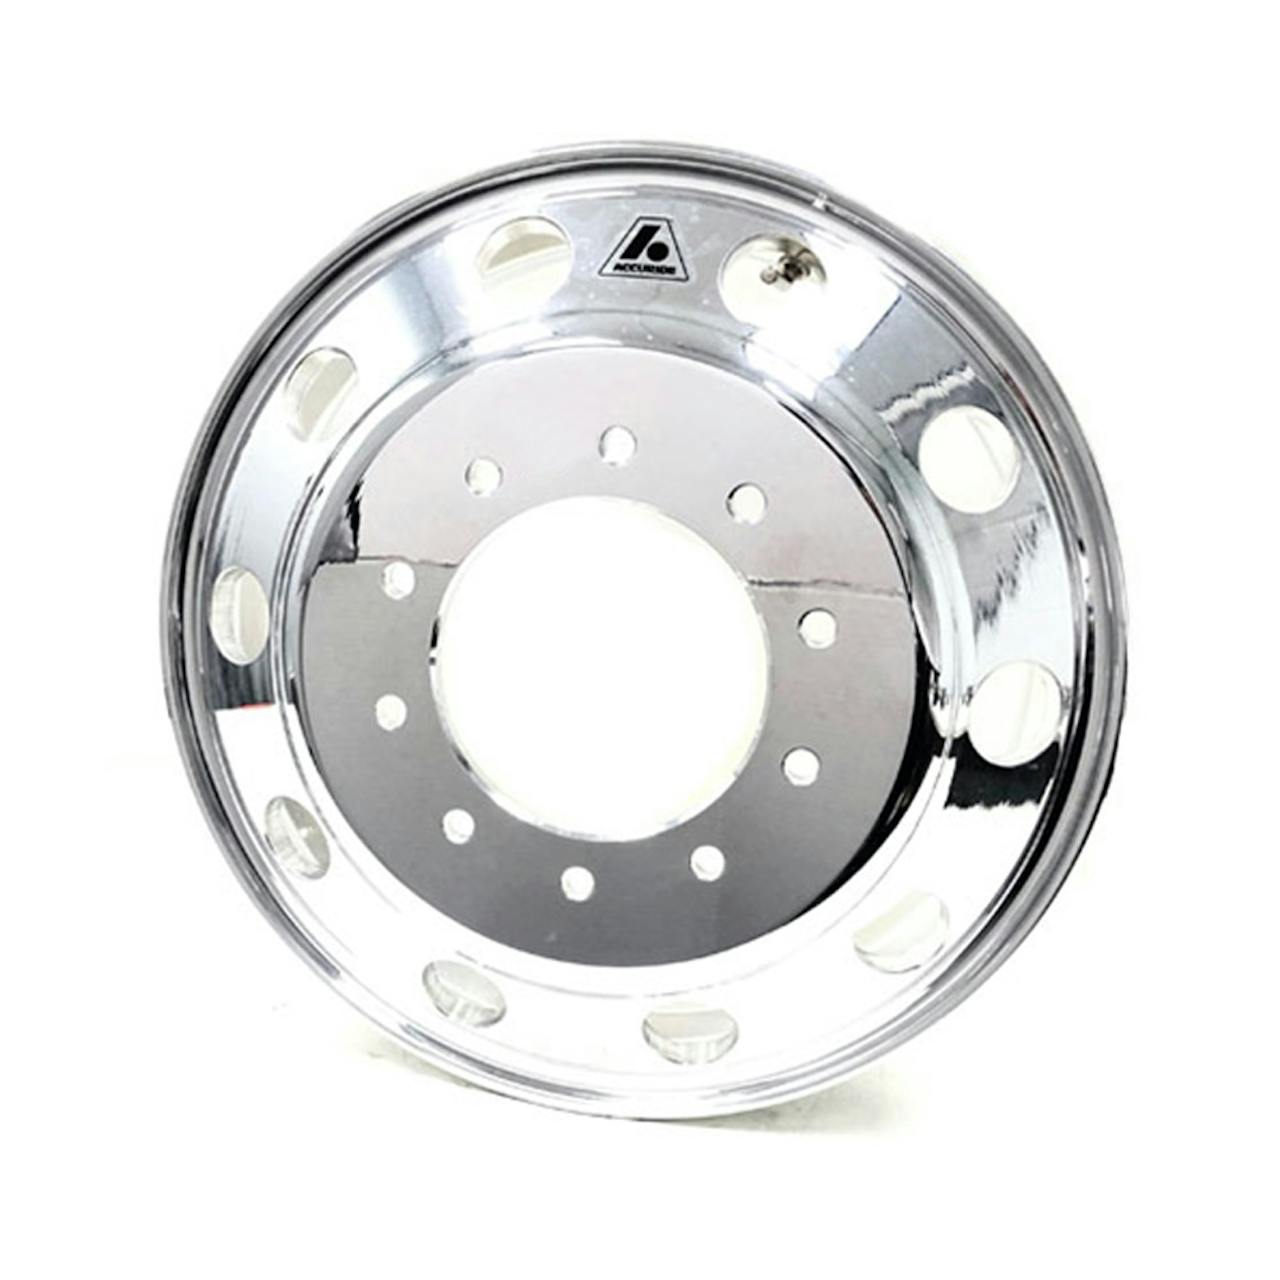 Aluminum wheel polish